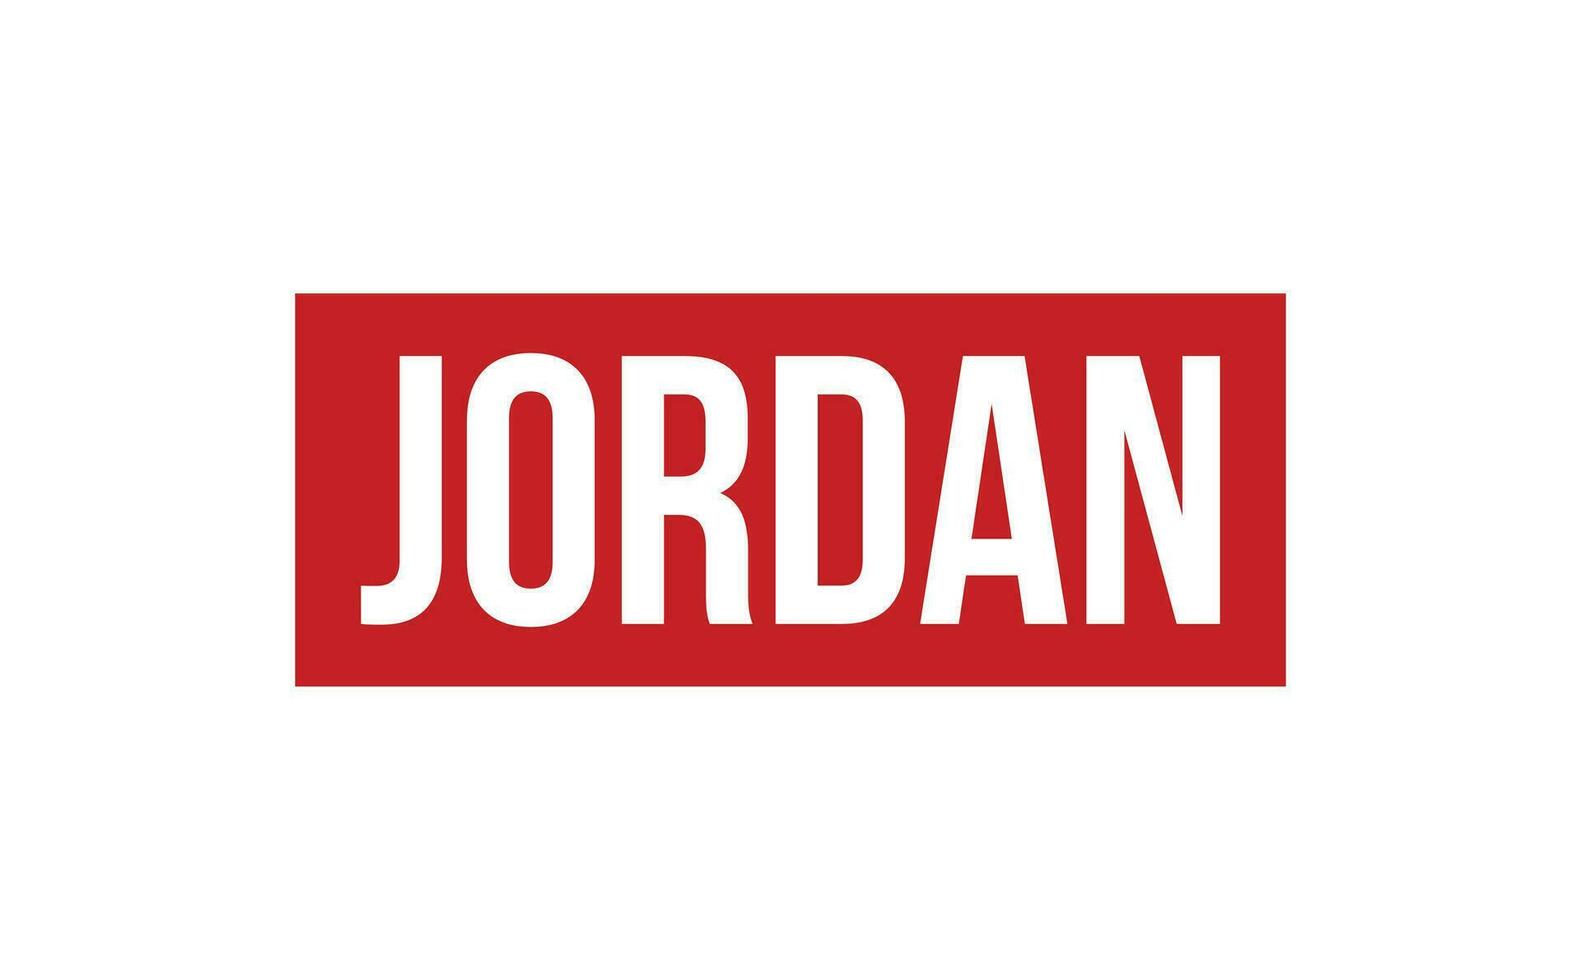 Jordânia borracha carimbo foca vetor